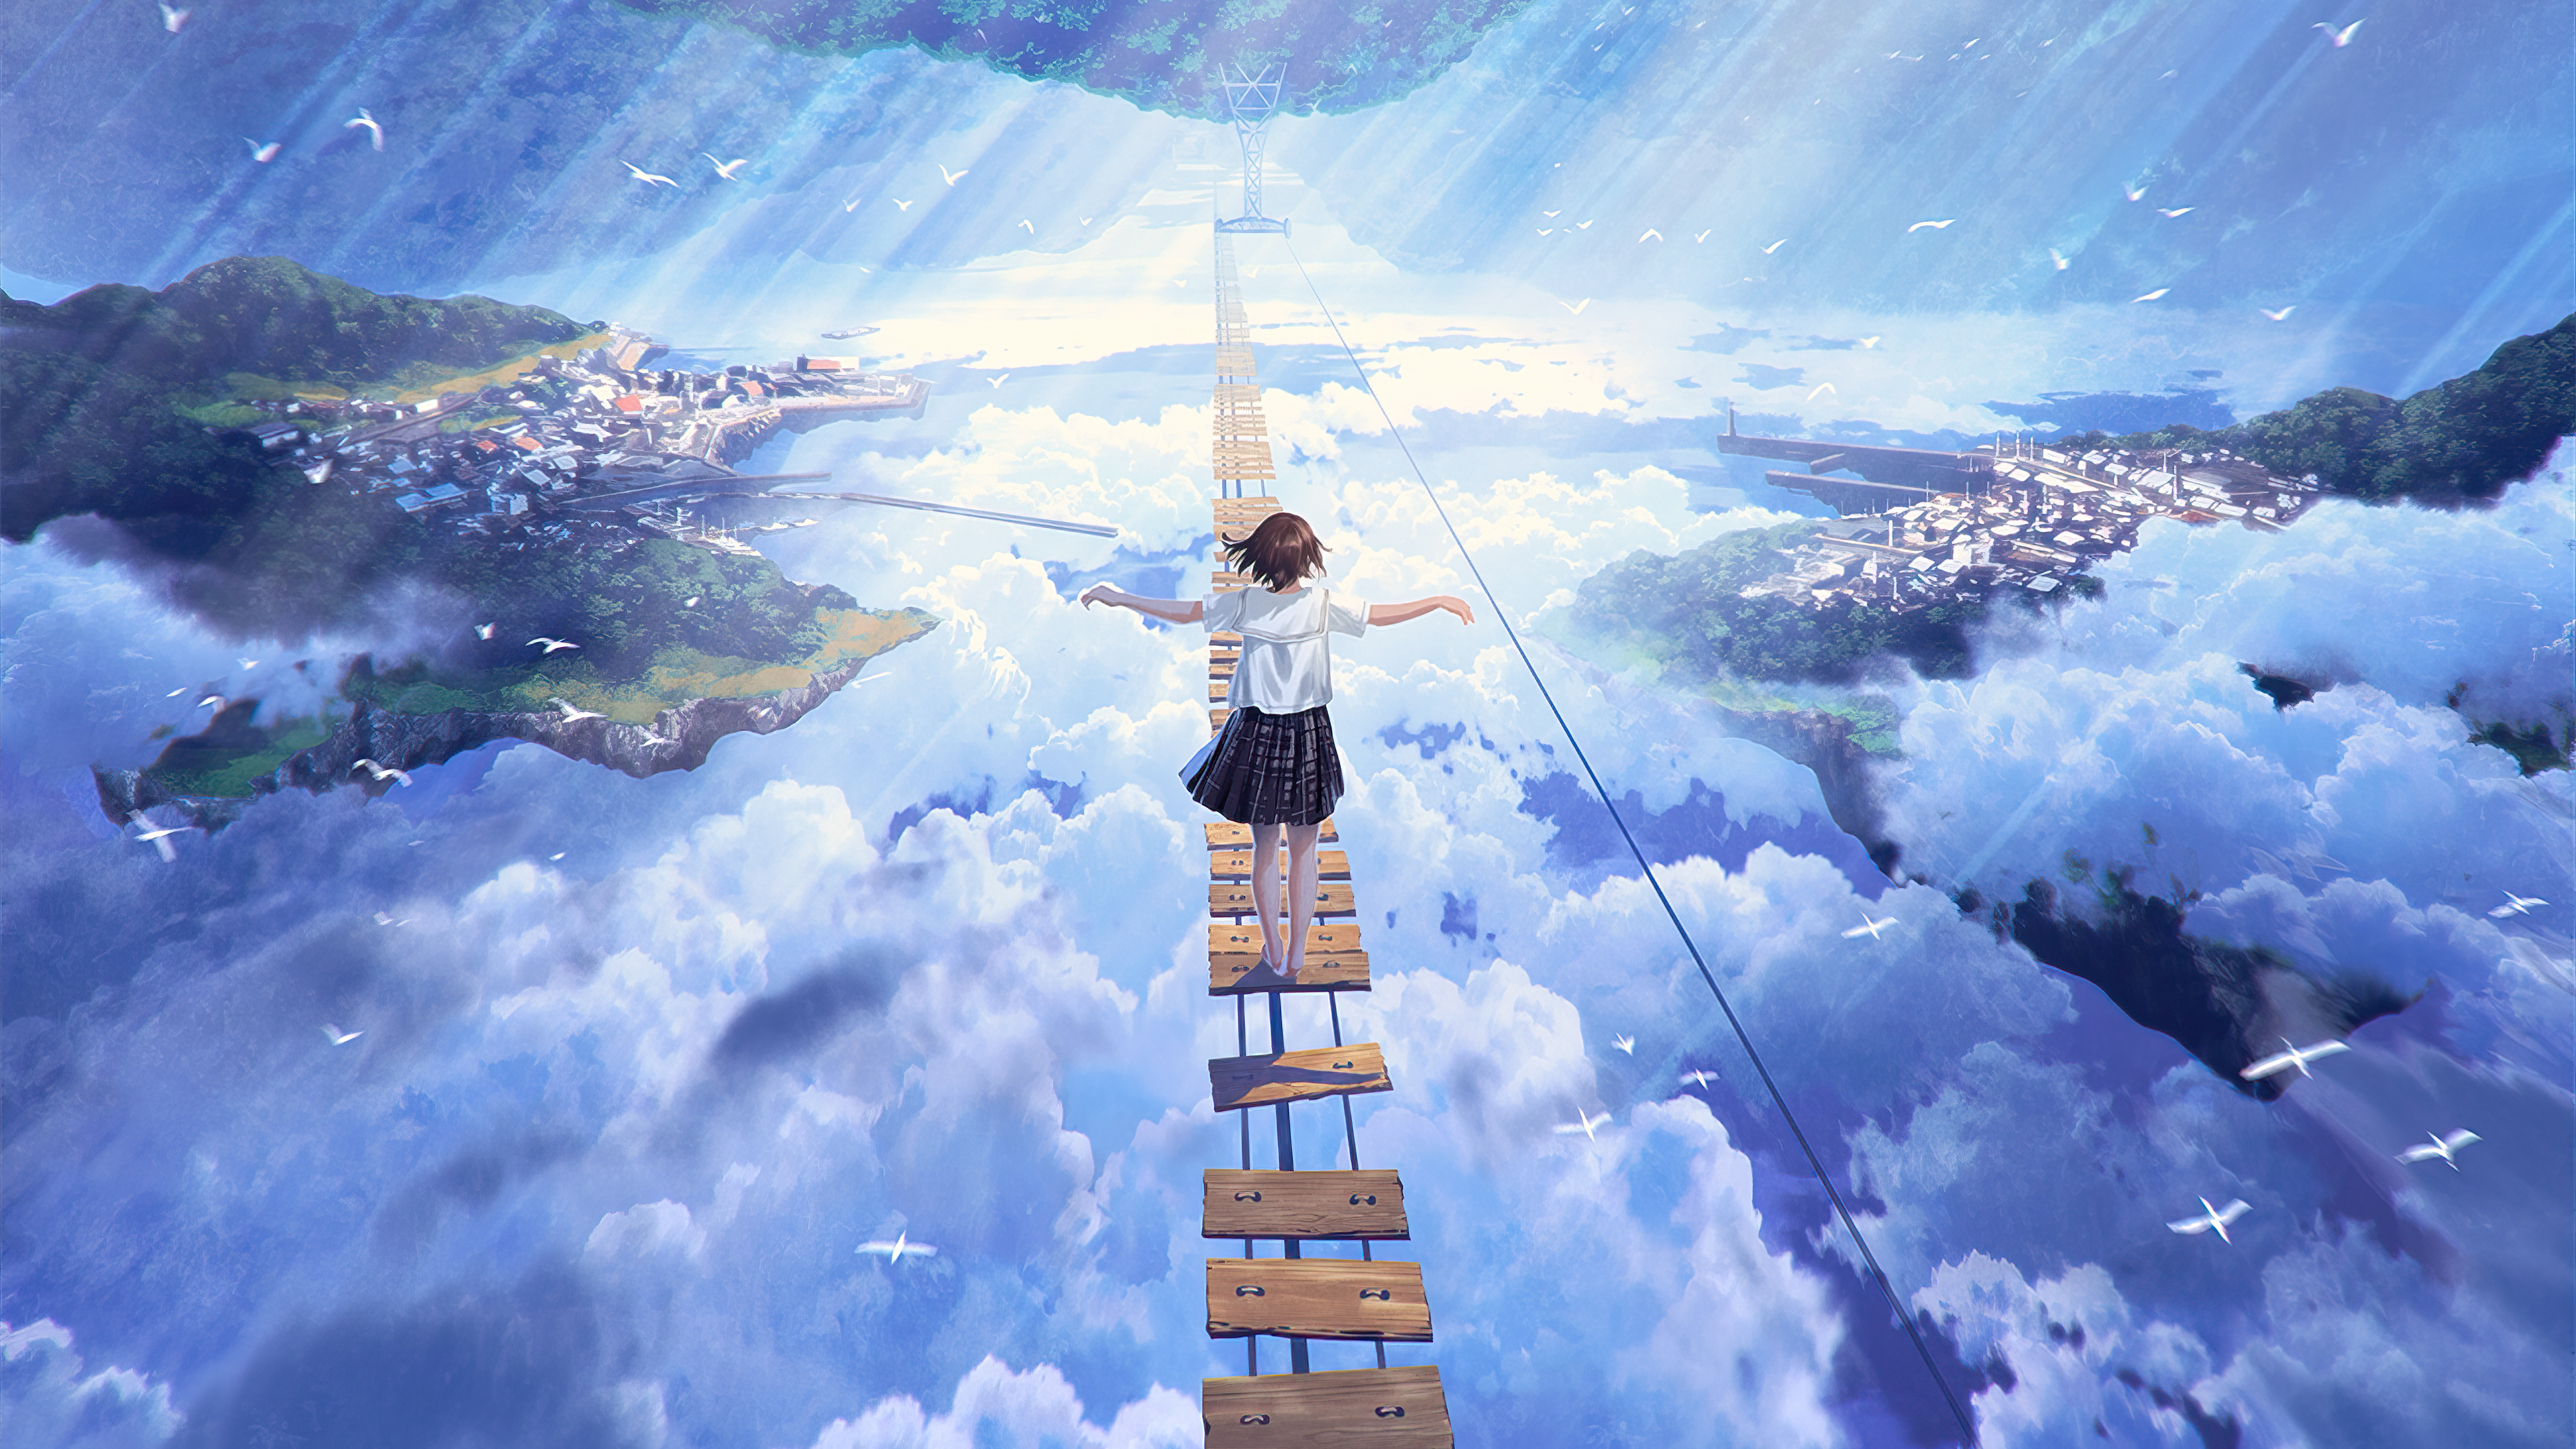 Anime Girl Walking On Dream Bridge 4k 4k HD 4k Wallpaper, Image, Background, Photo and Picture